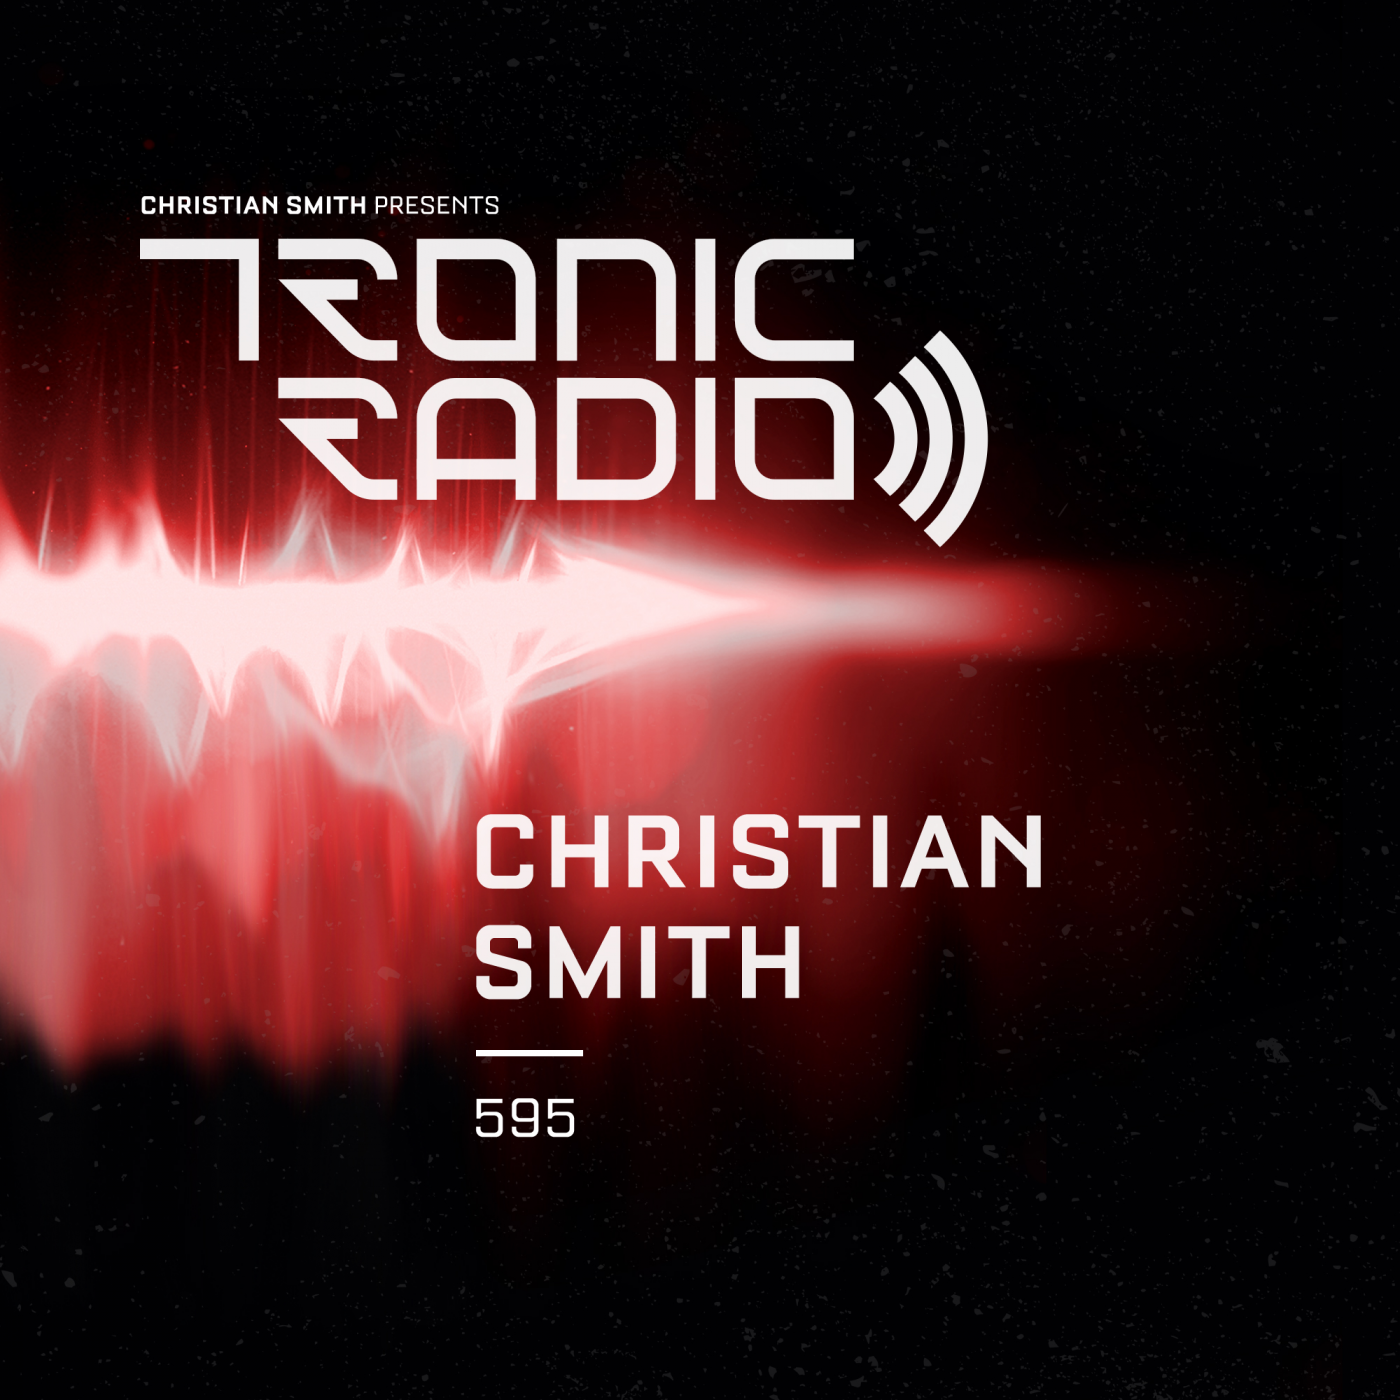 Tronic Podcast 595 with Christian Smith (Live from Kite-Ankara-Turkey)